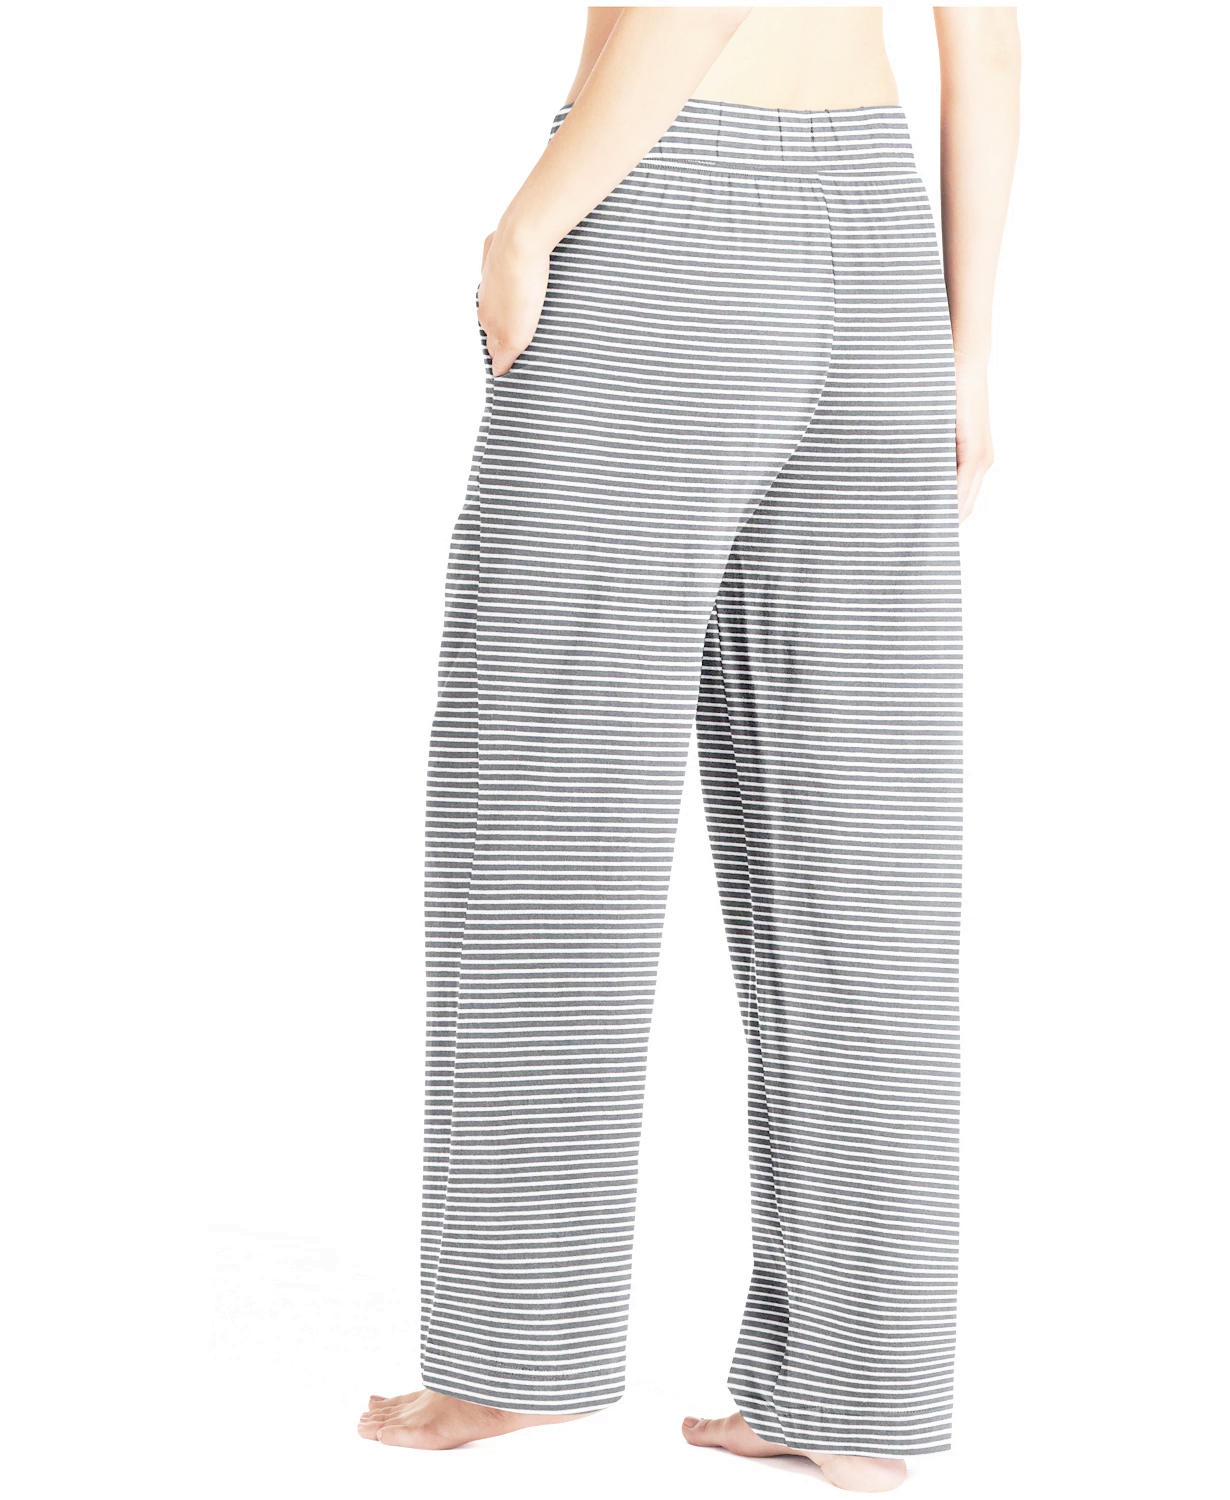 Jockey Womens Everyday Essentials Cotton Pajama Pants